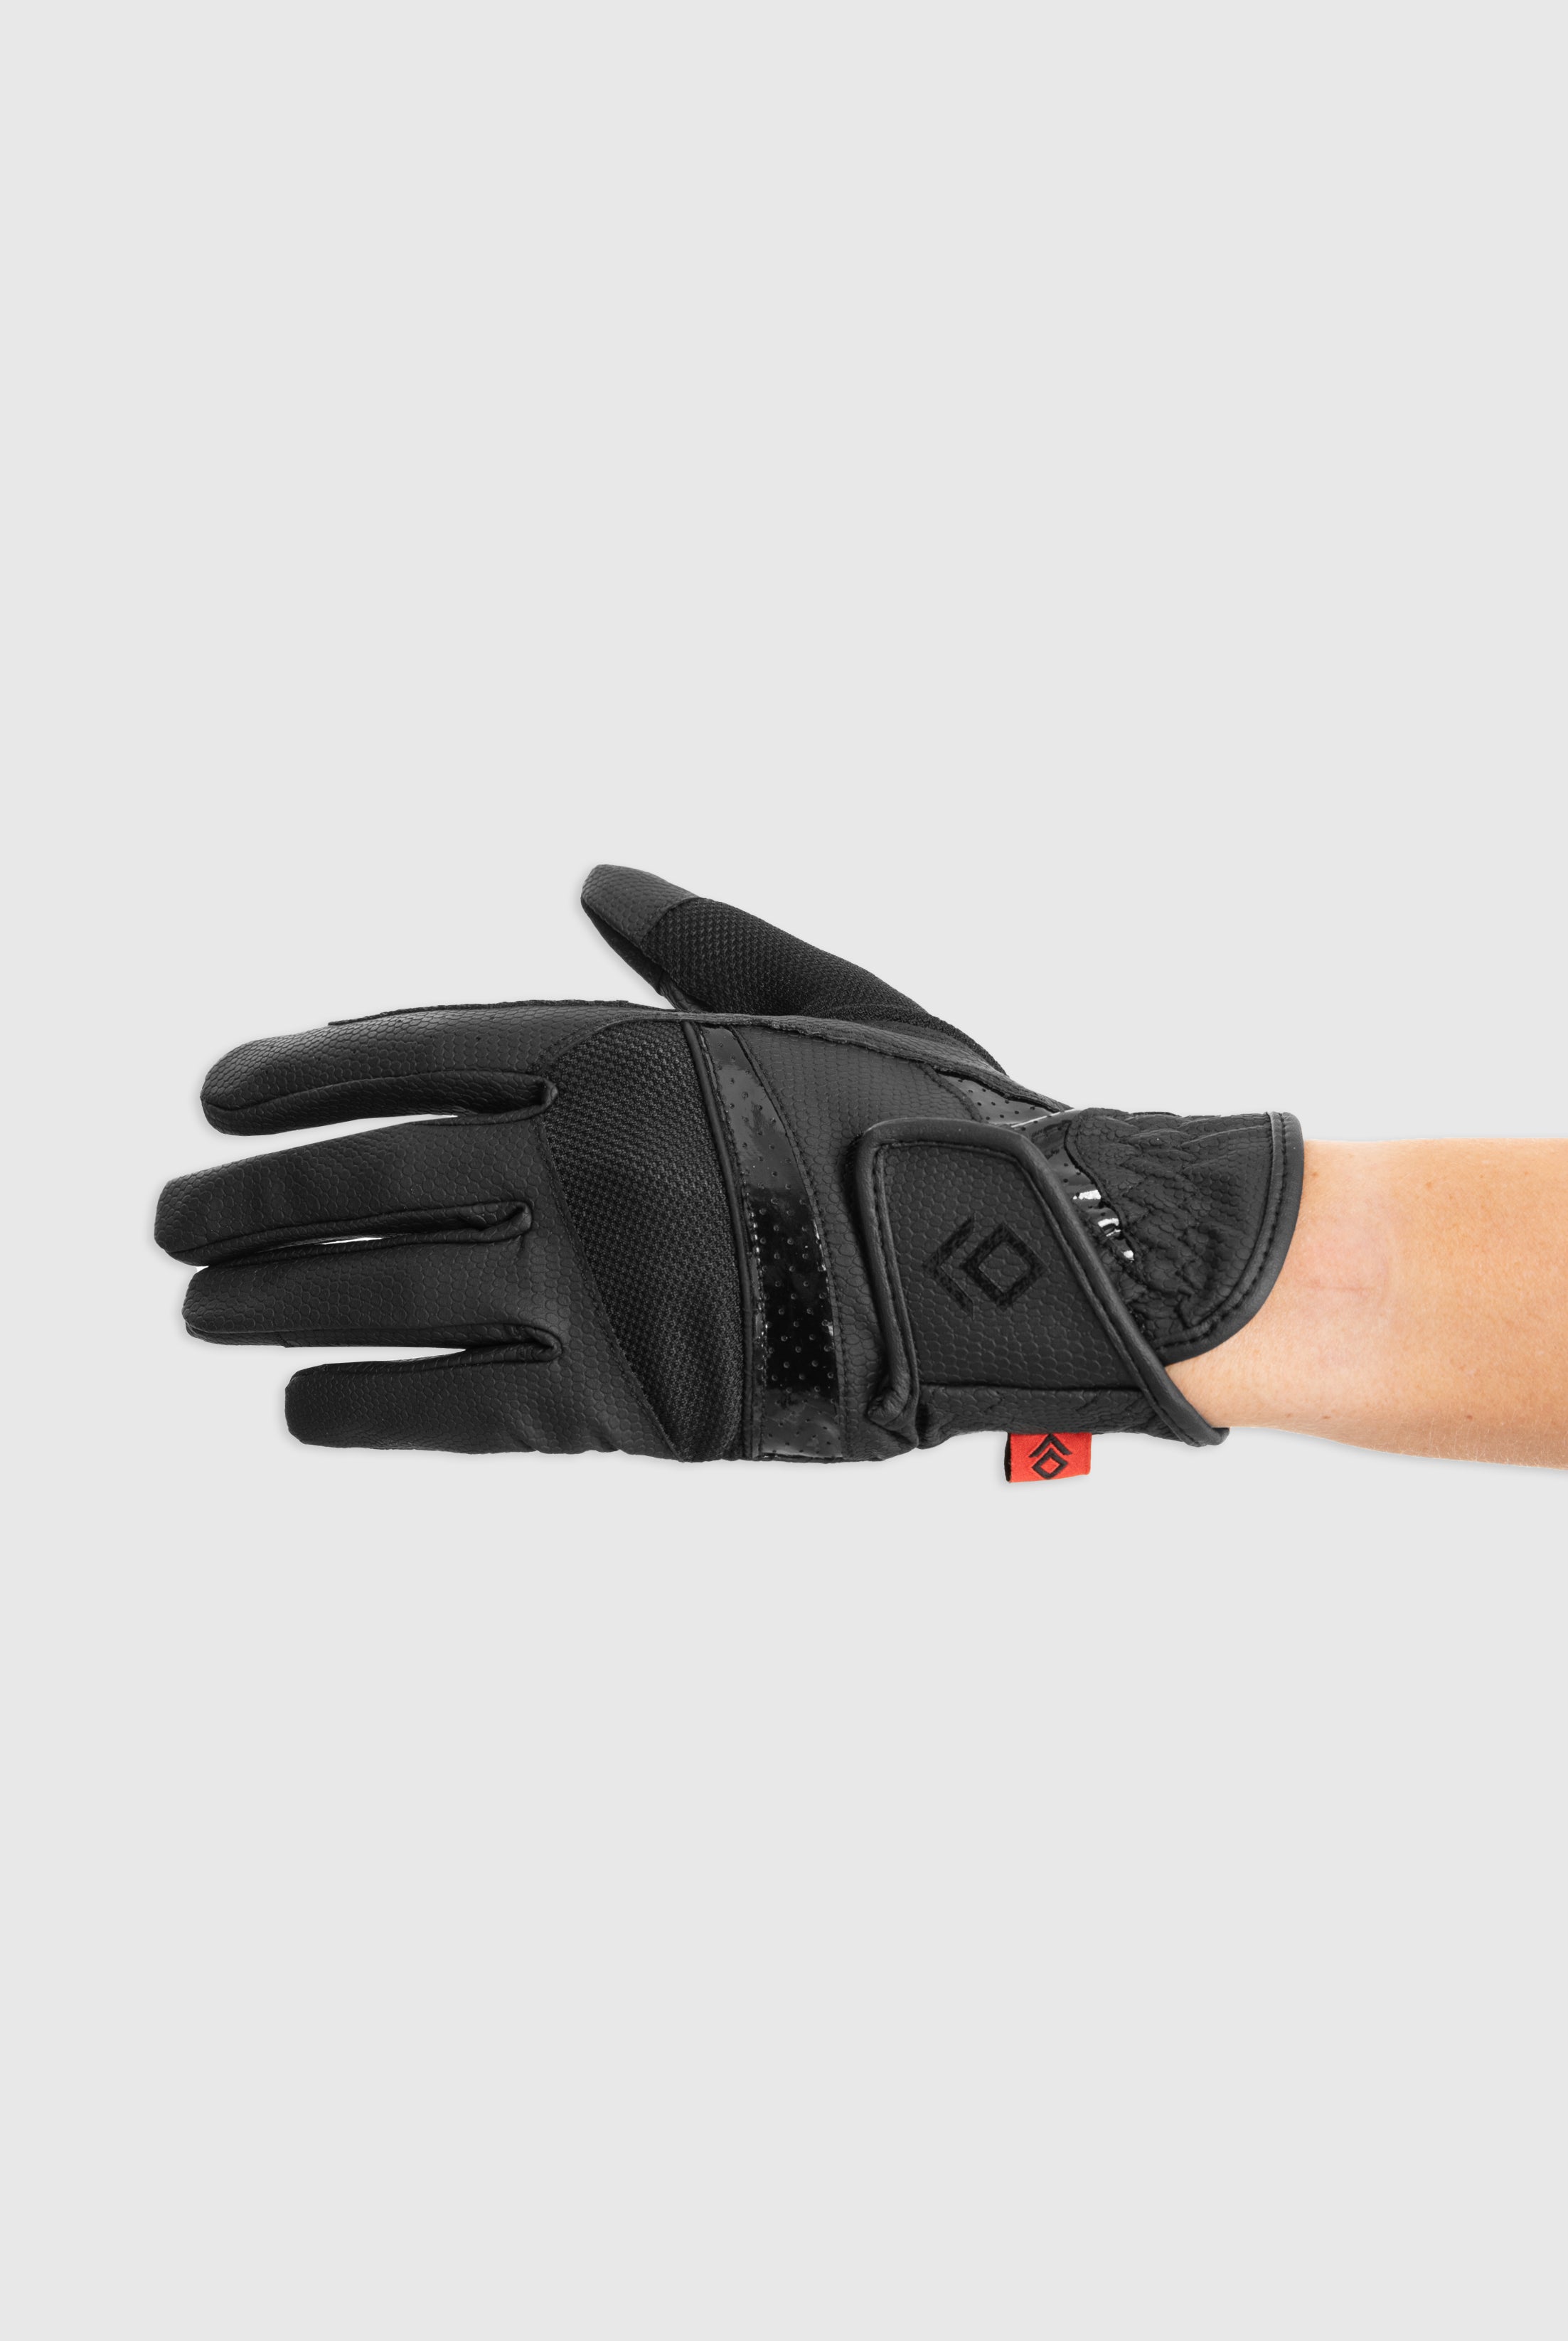 Black Patent Pro Grip Riding Glove